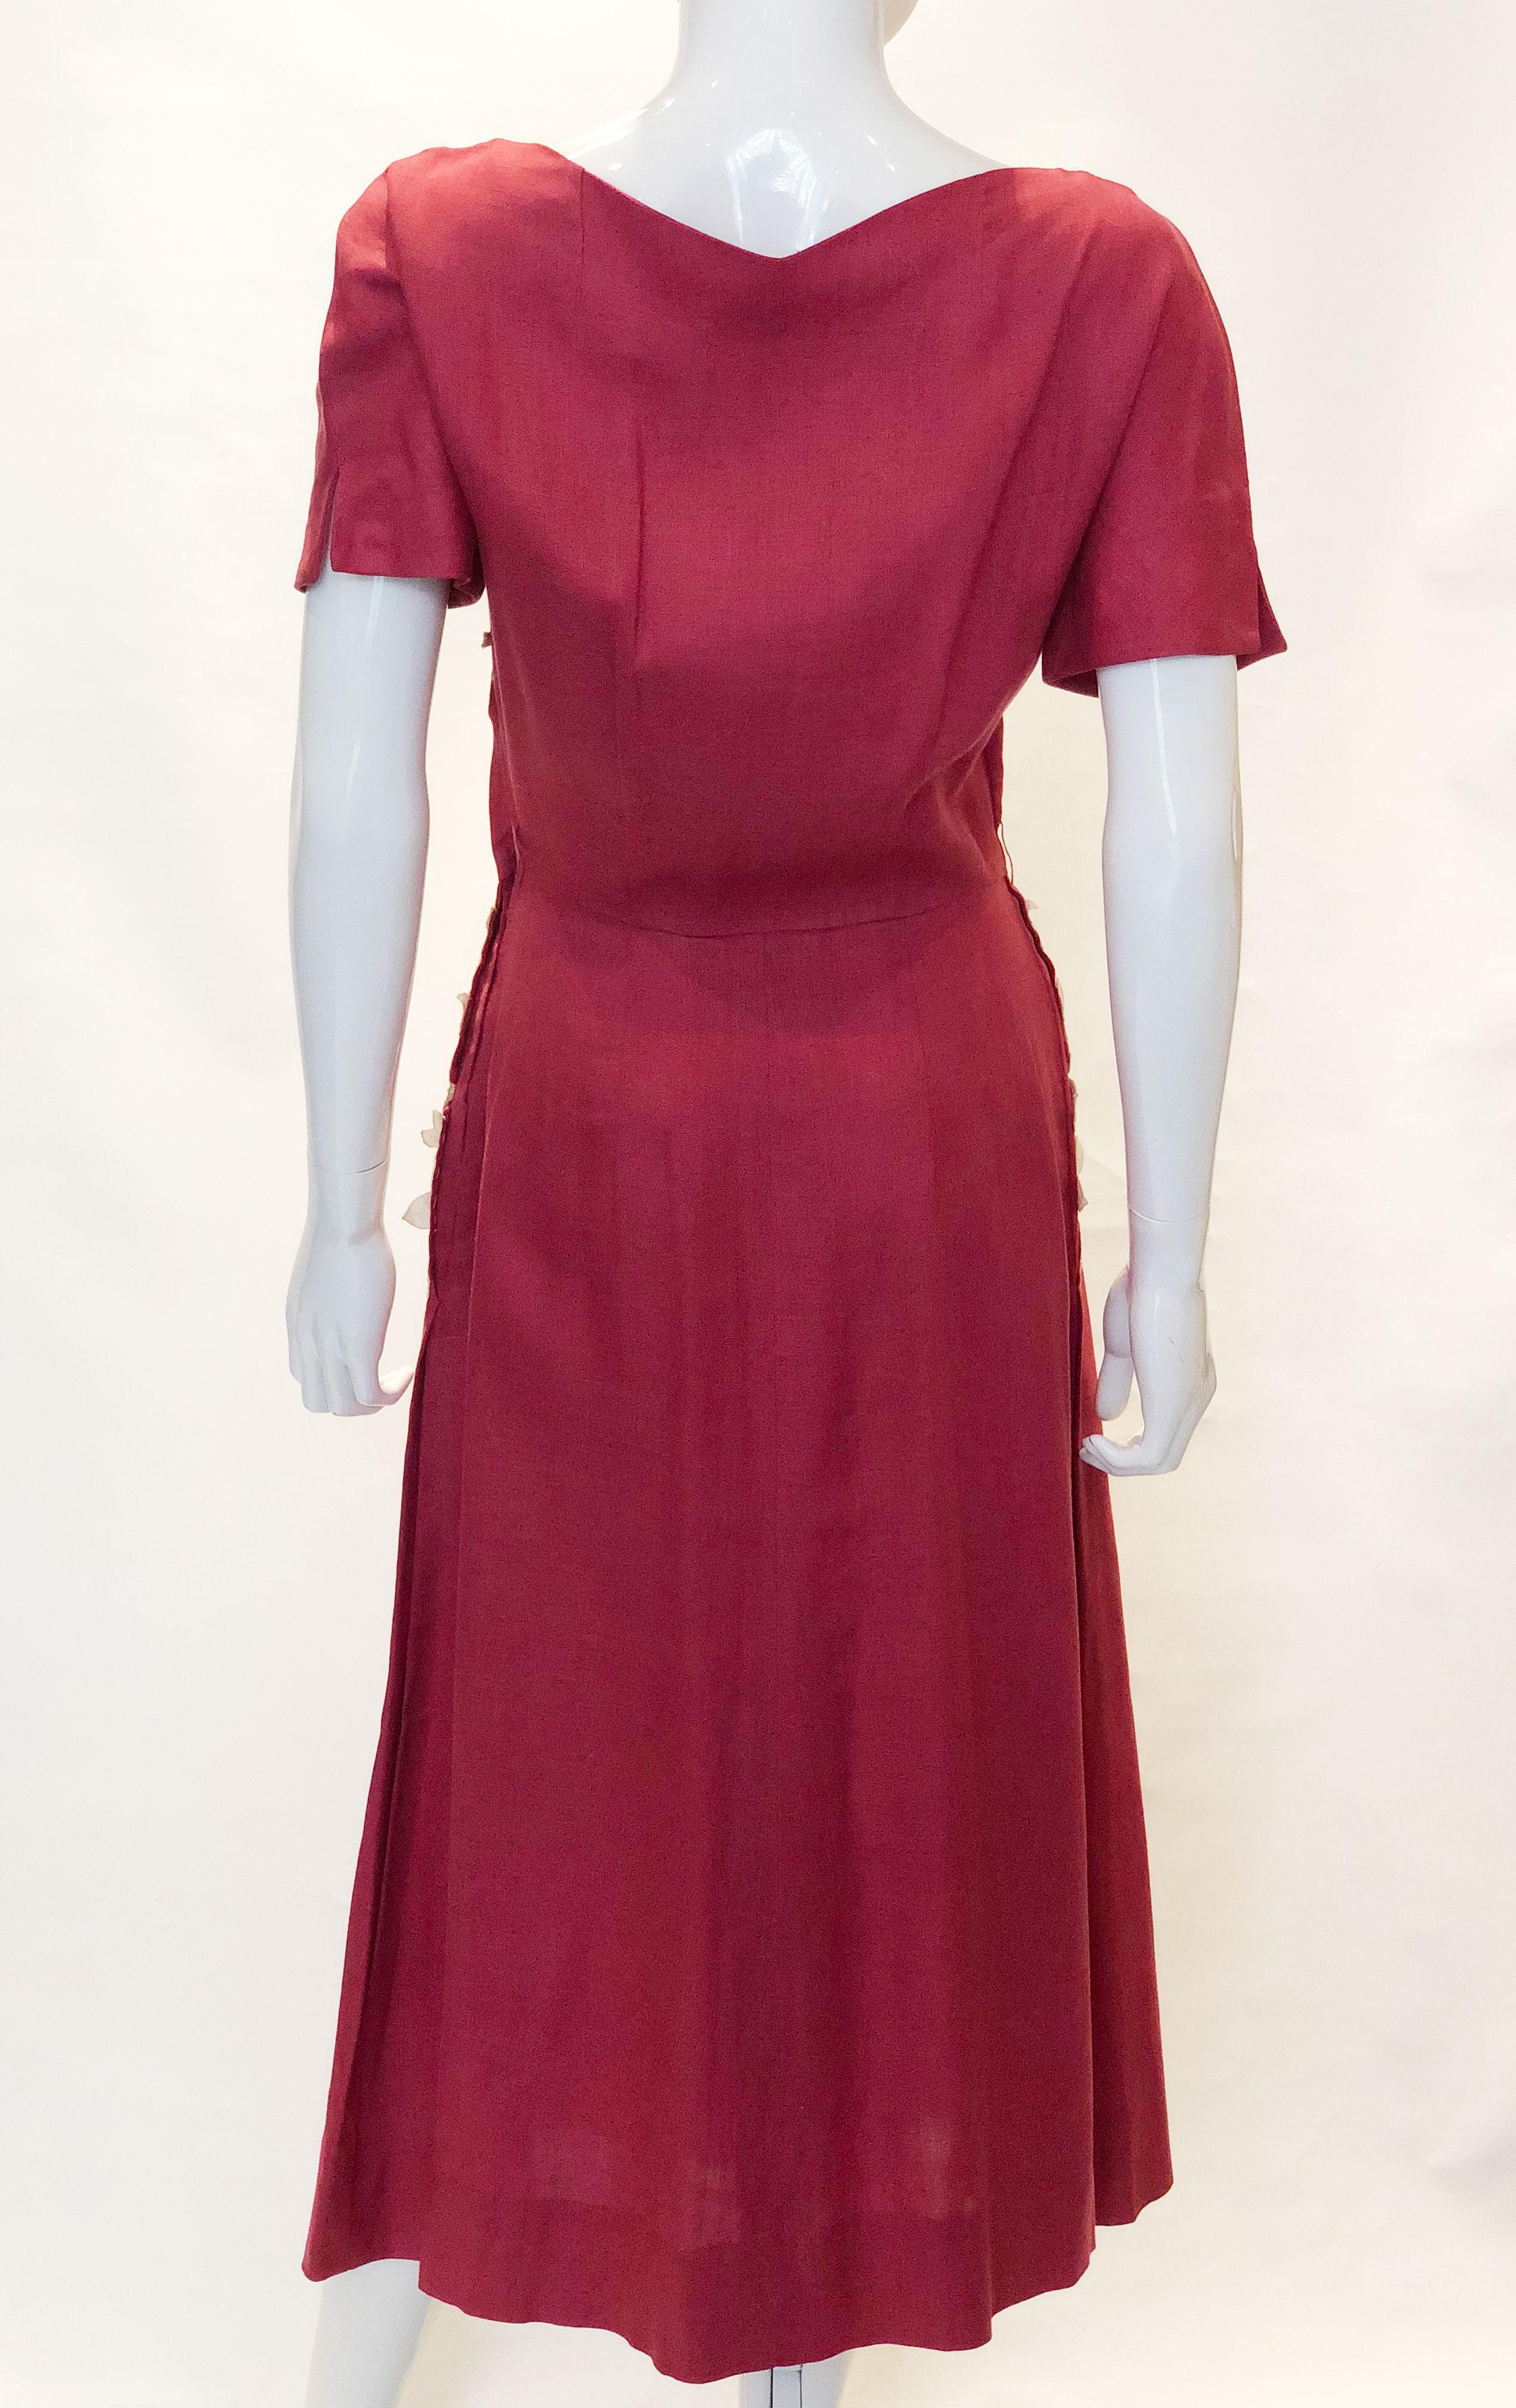 Women's Vintage Pink 1950s Linen Dress with Rosebud detail For Sale